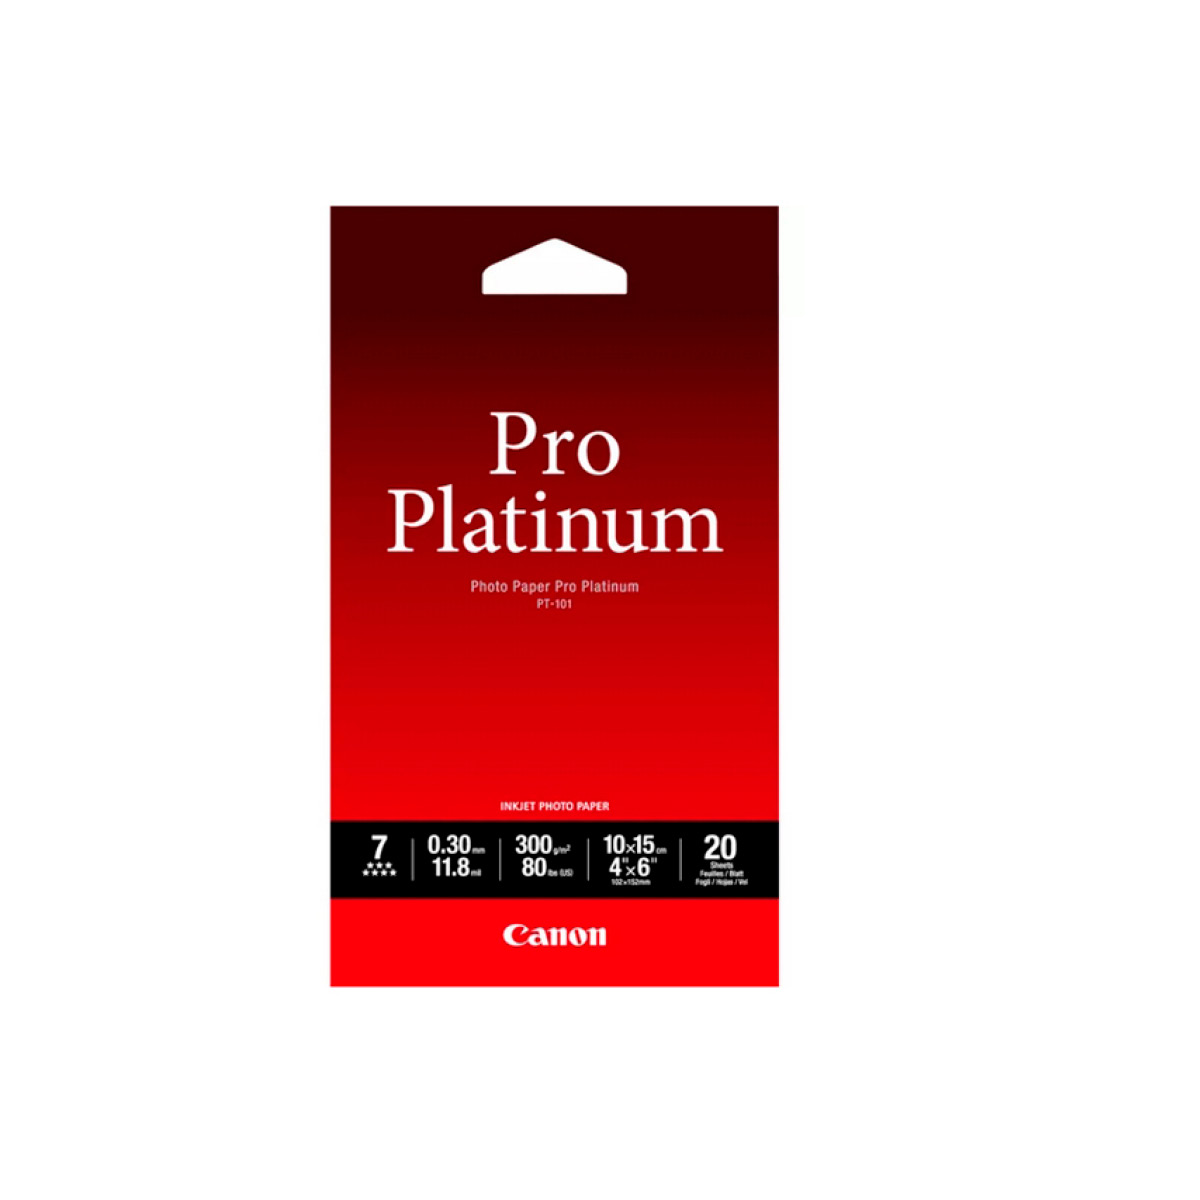 Canon Pro Platinum PT-101, 10x15 cm Fotopapier 20 Blatt 300g/m² 